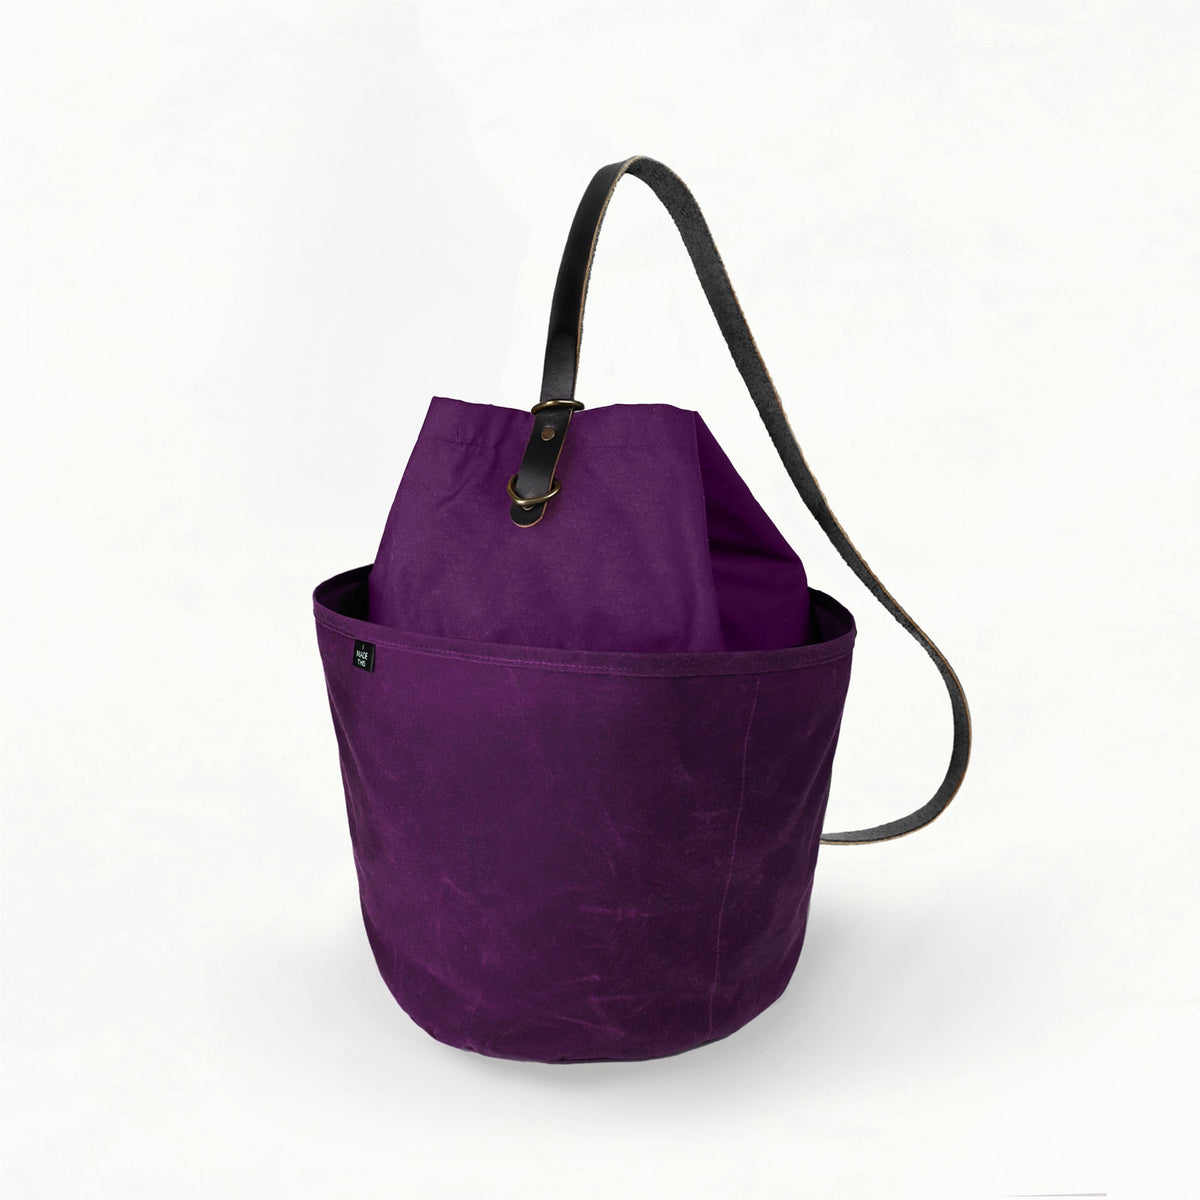 Naito - Plum Bag Maker Kit